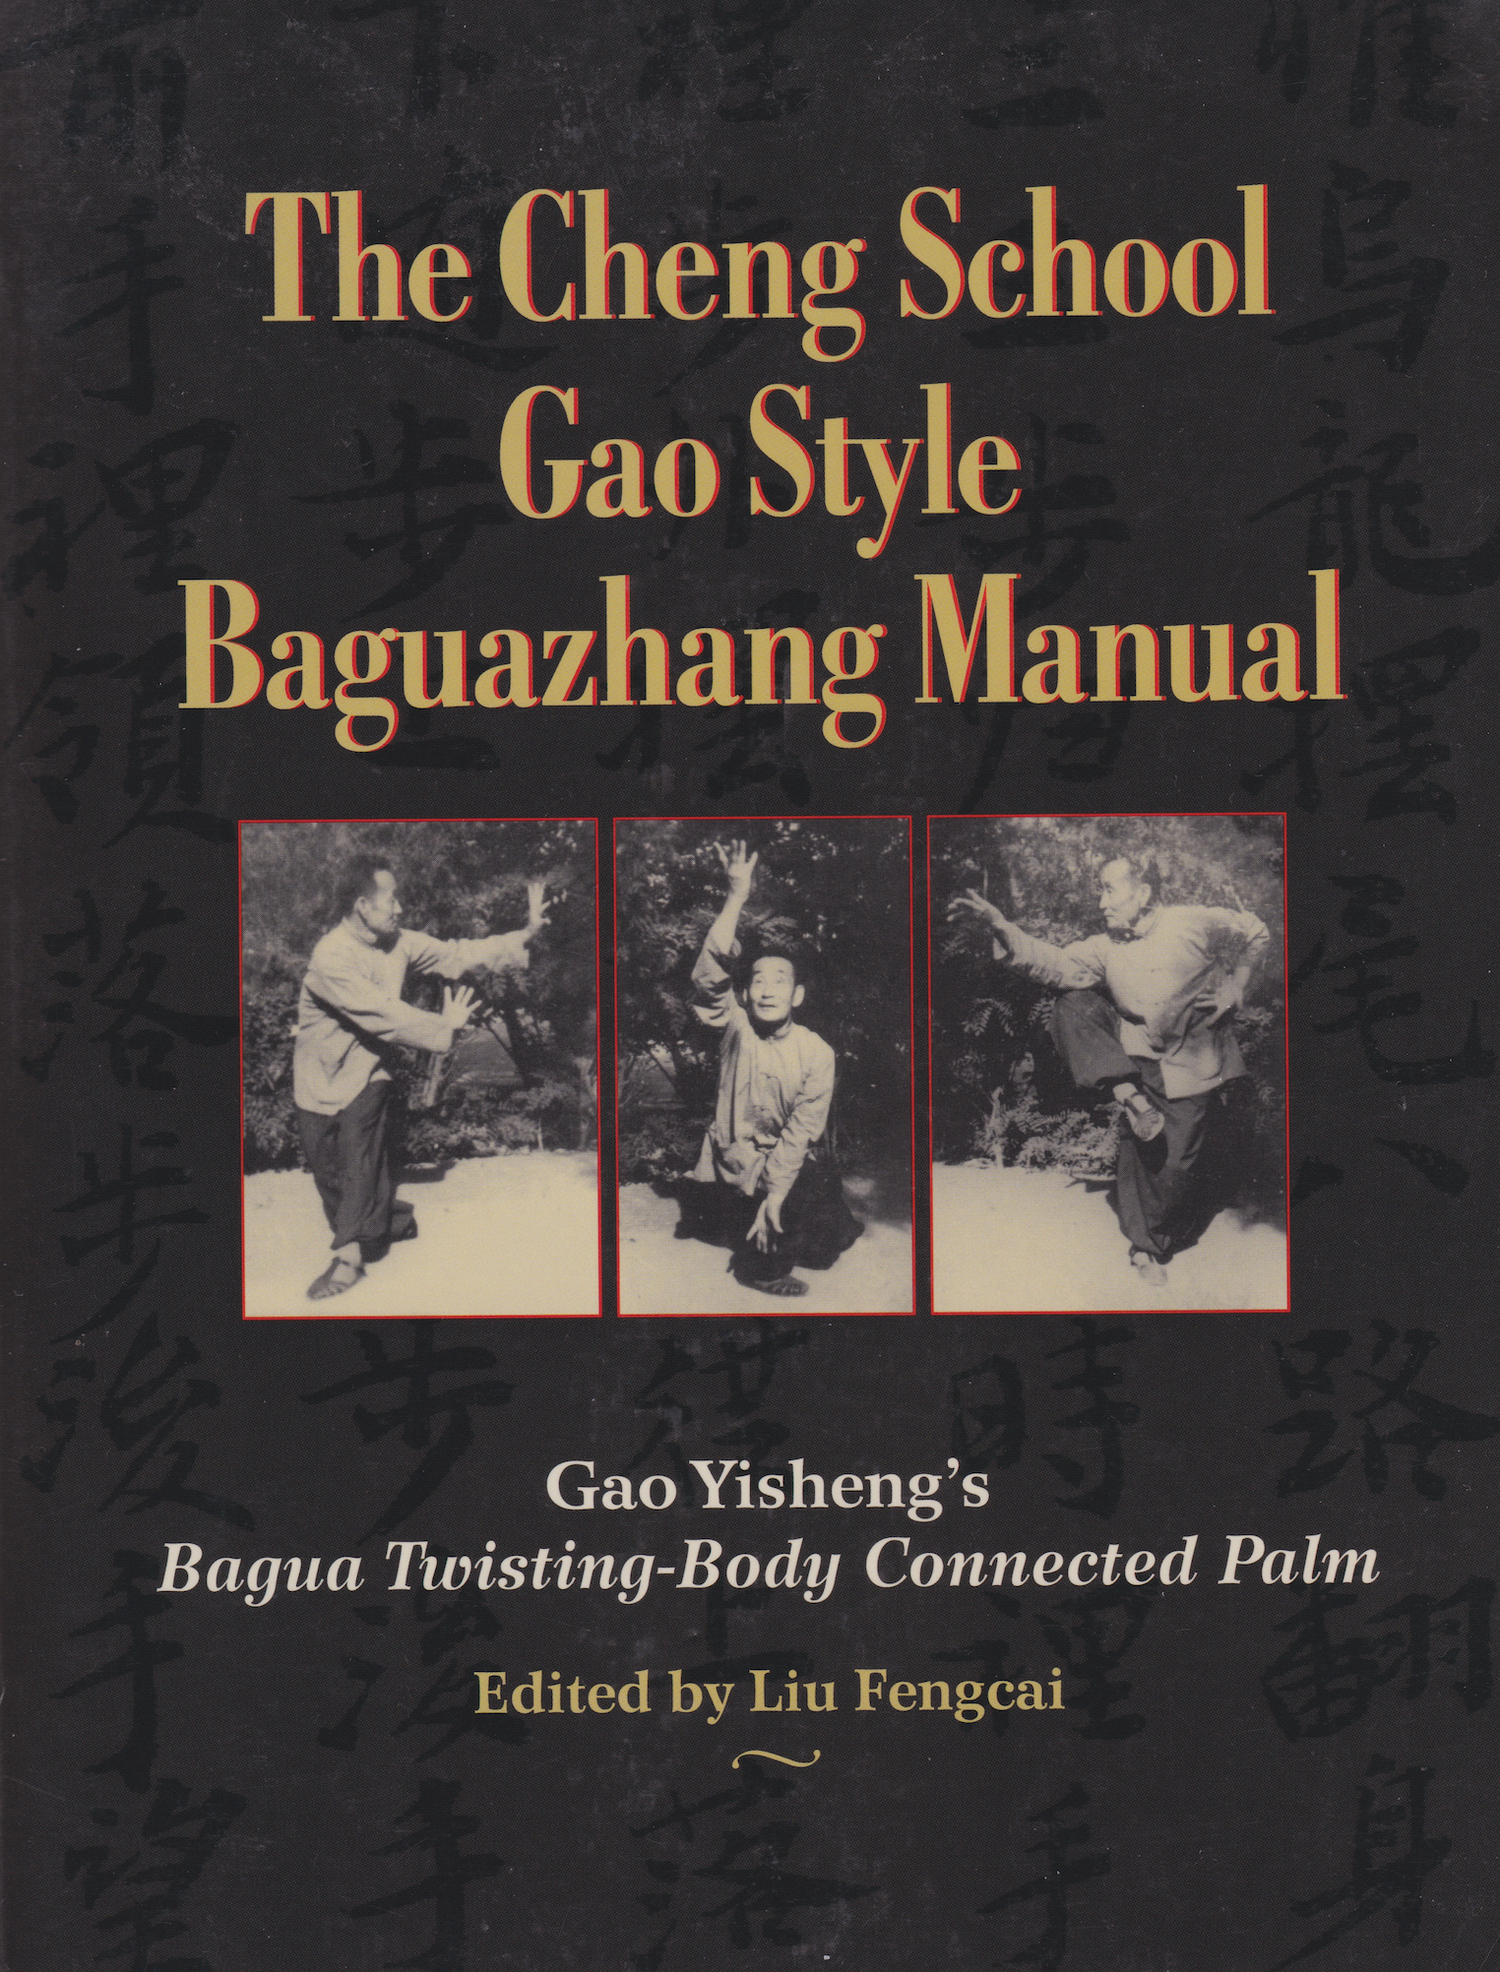 The Cheng School Gao Style Baguazhang Manual: Gao Yisheng's Bagua Twisting-Body Connected Palm Book by Gao Yisheng (Preowned)